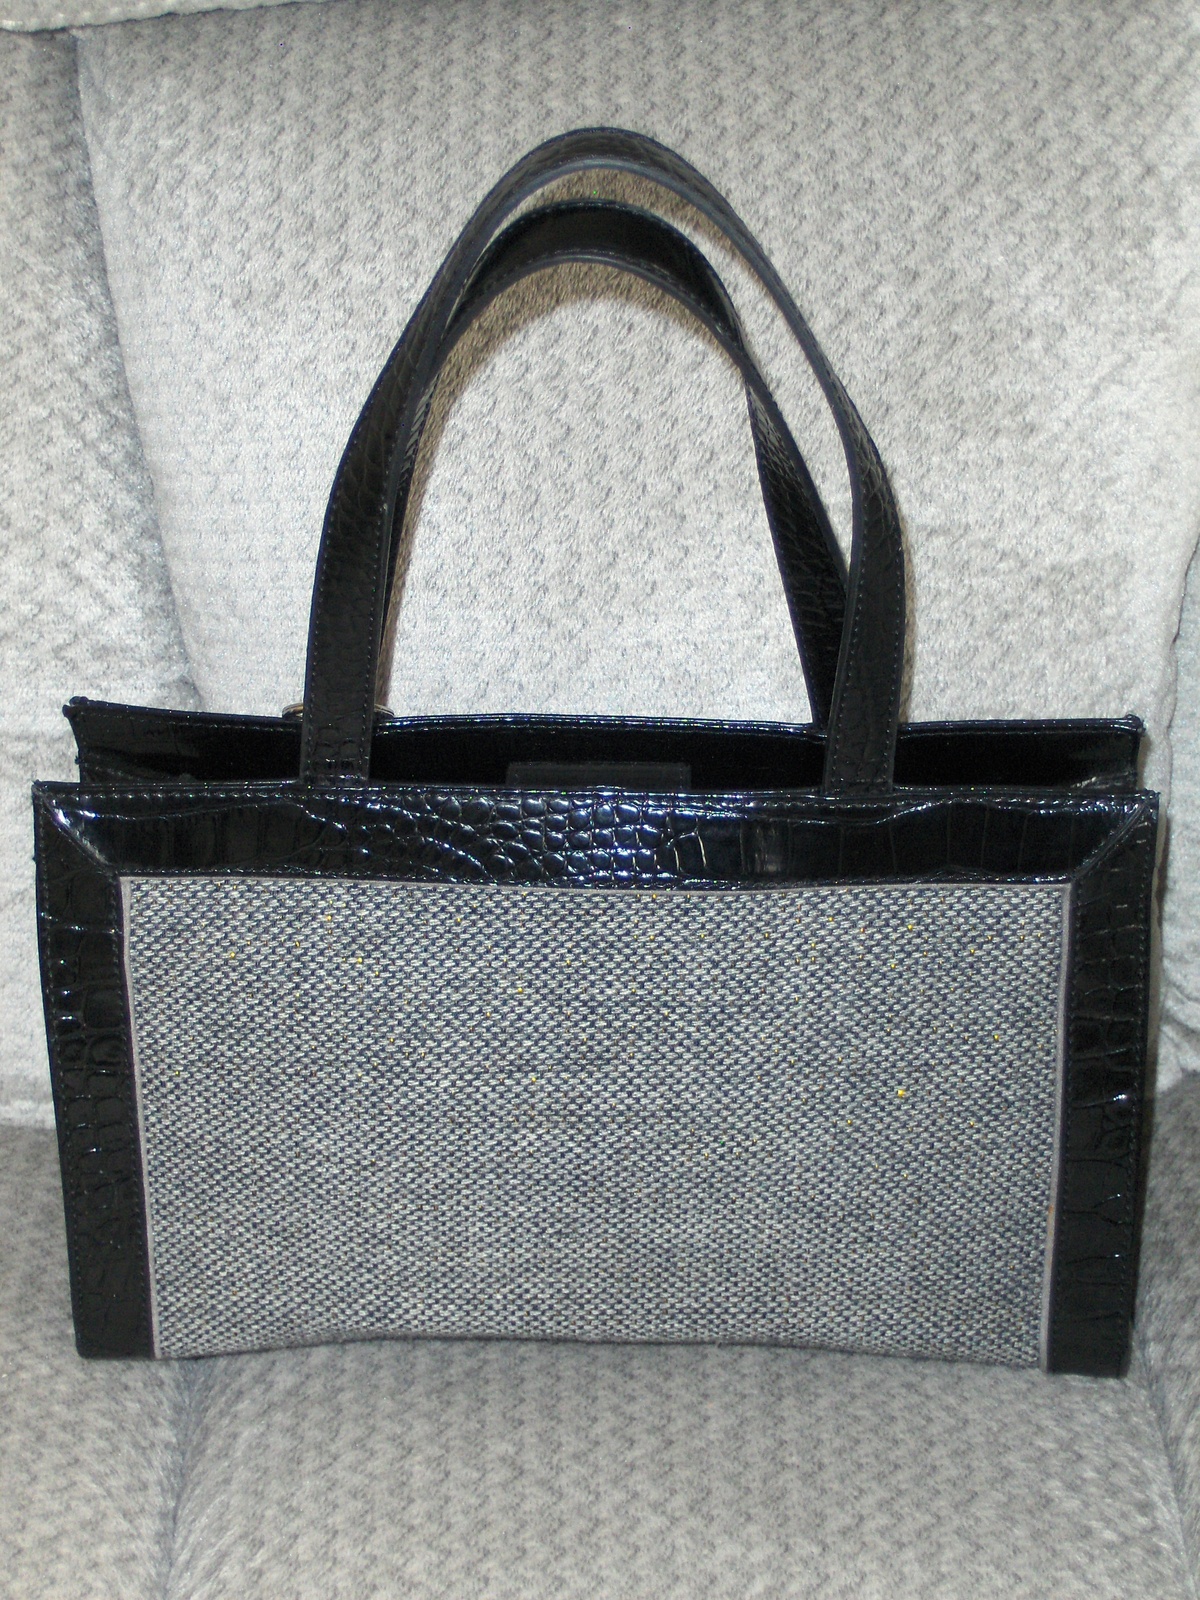 Liz Claiborne Satchel Black Handbag Purse Tote Bag Metallic Thread ...